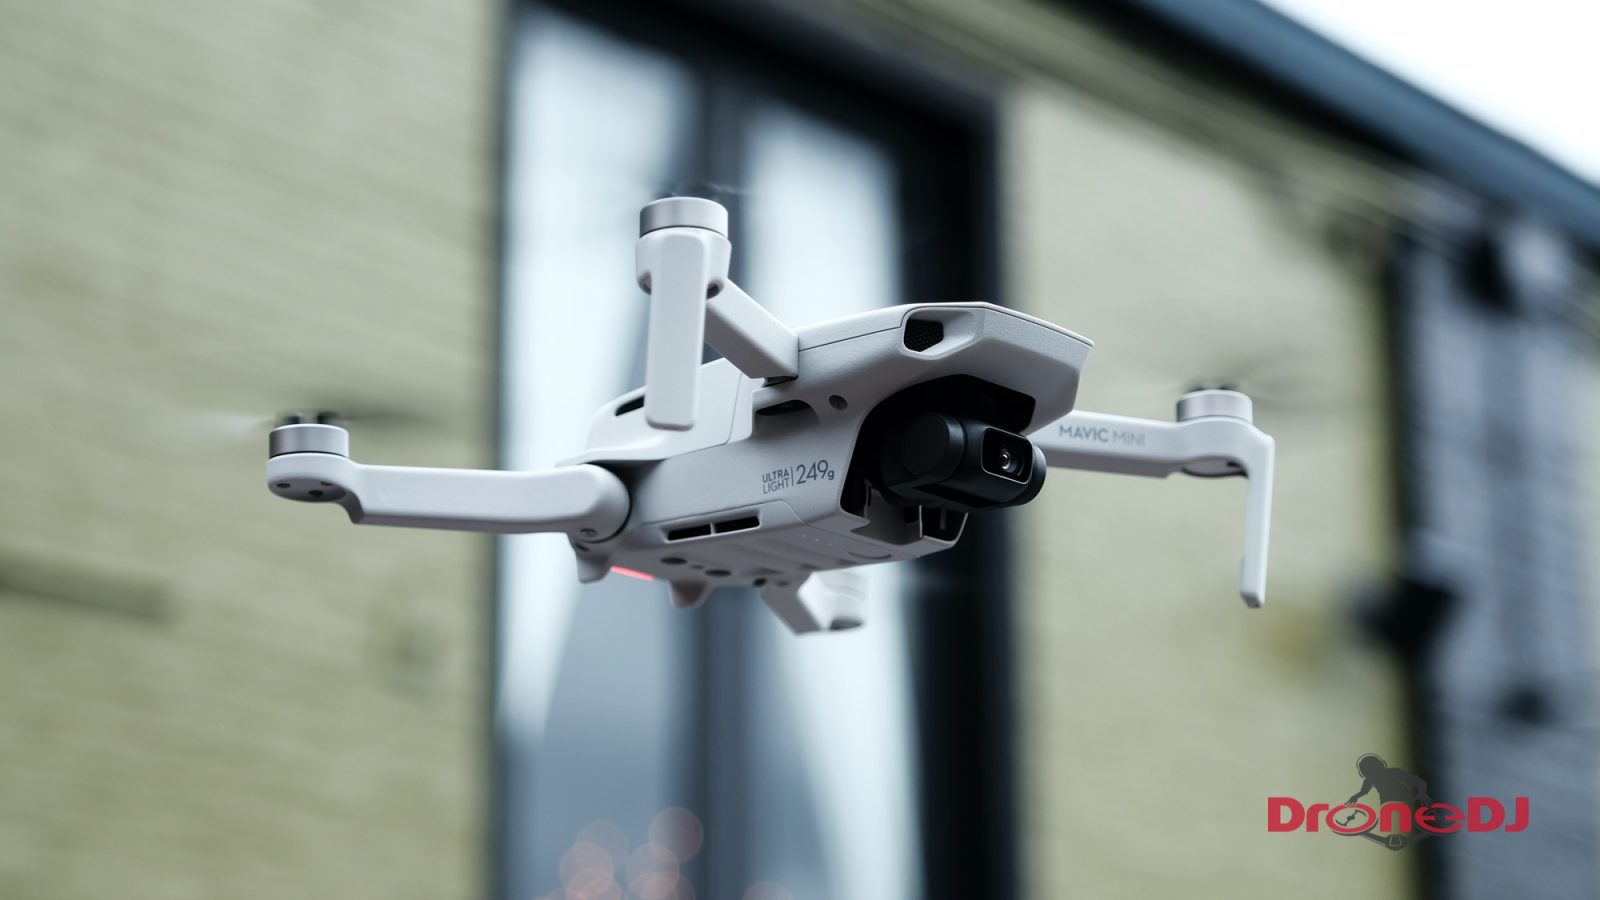 DJI-Mavic-Mini-drone-249-grams-the-everyday-flycam-aunch-event-brooklyn-NY-October-2019-0019.jpg